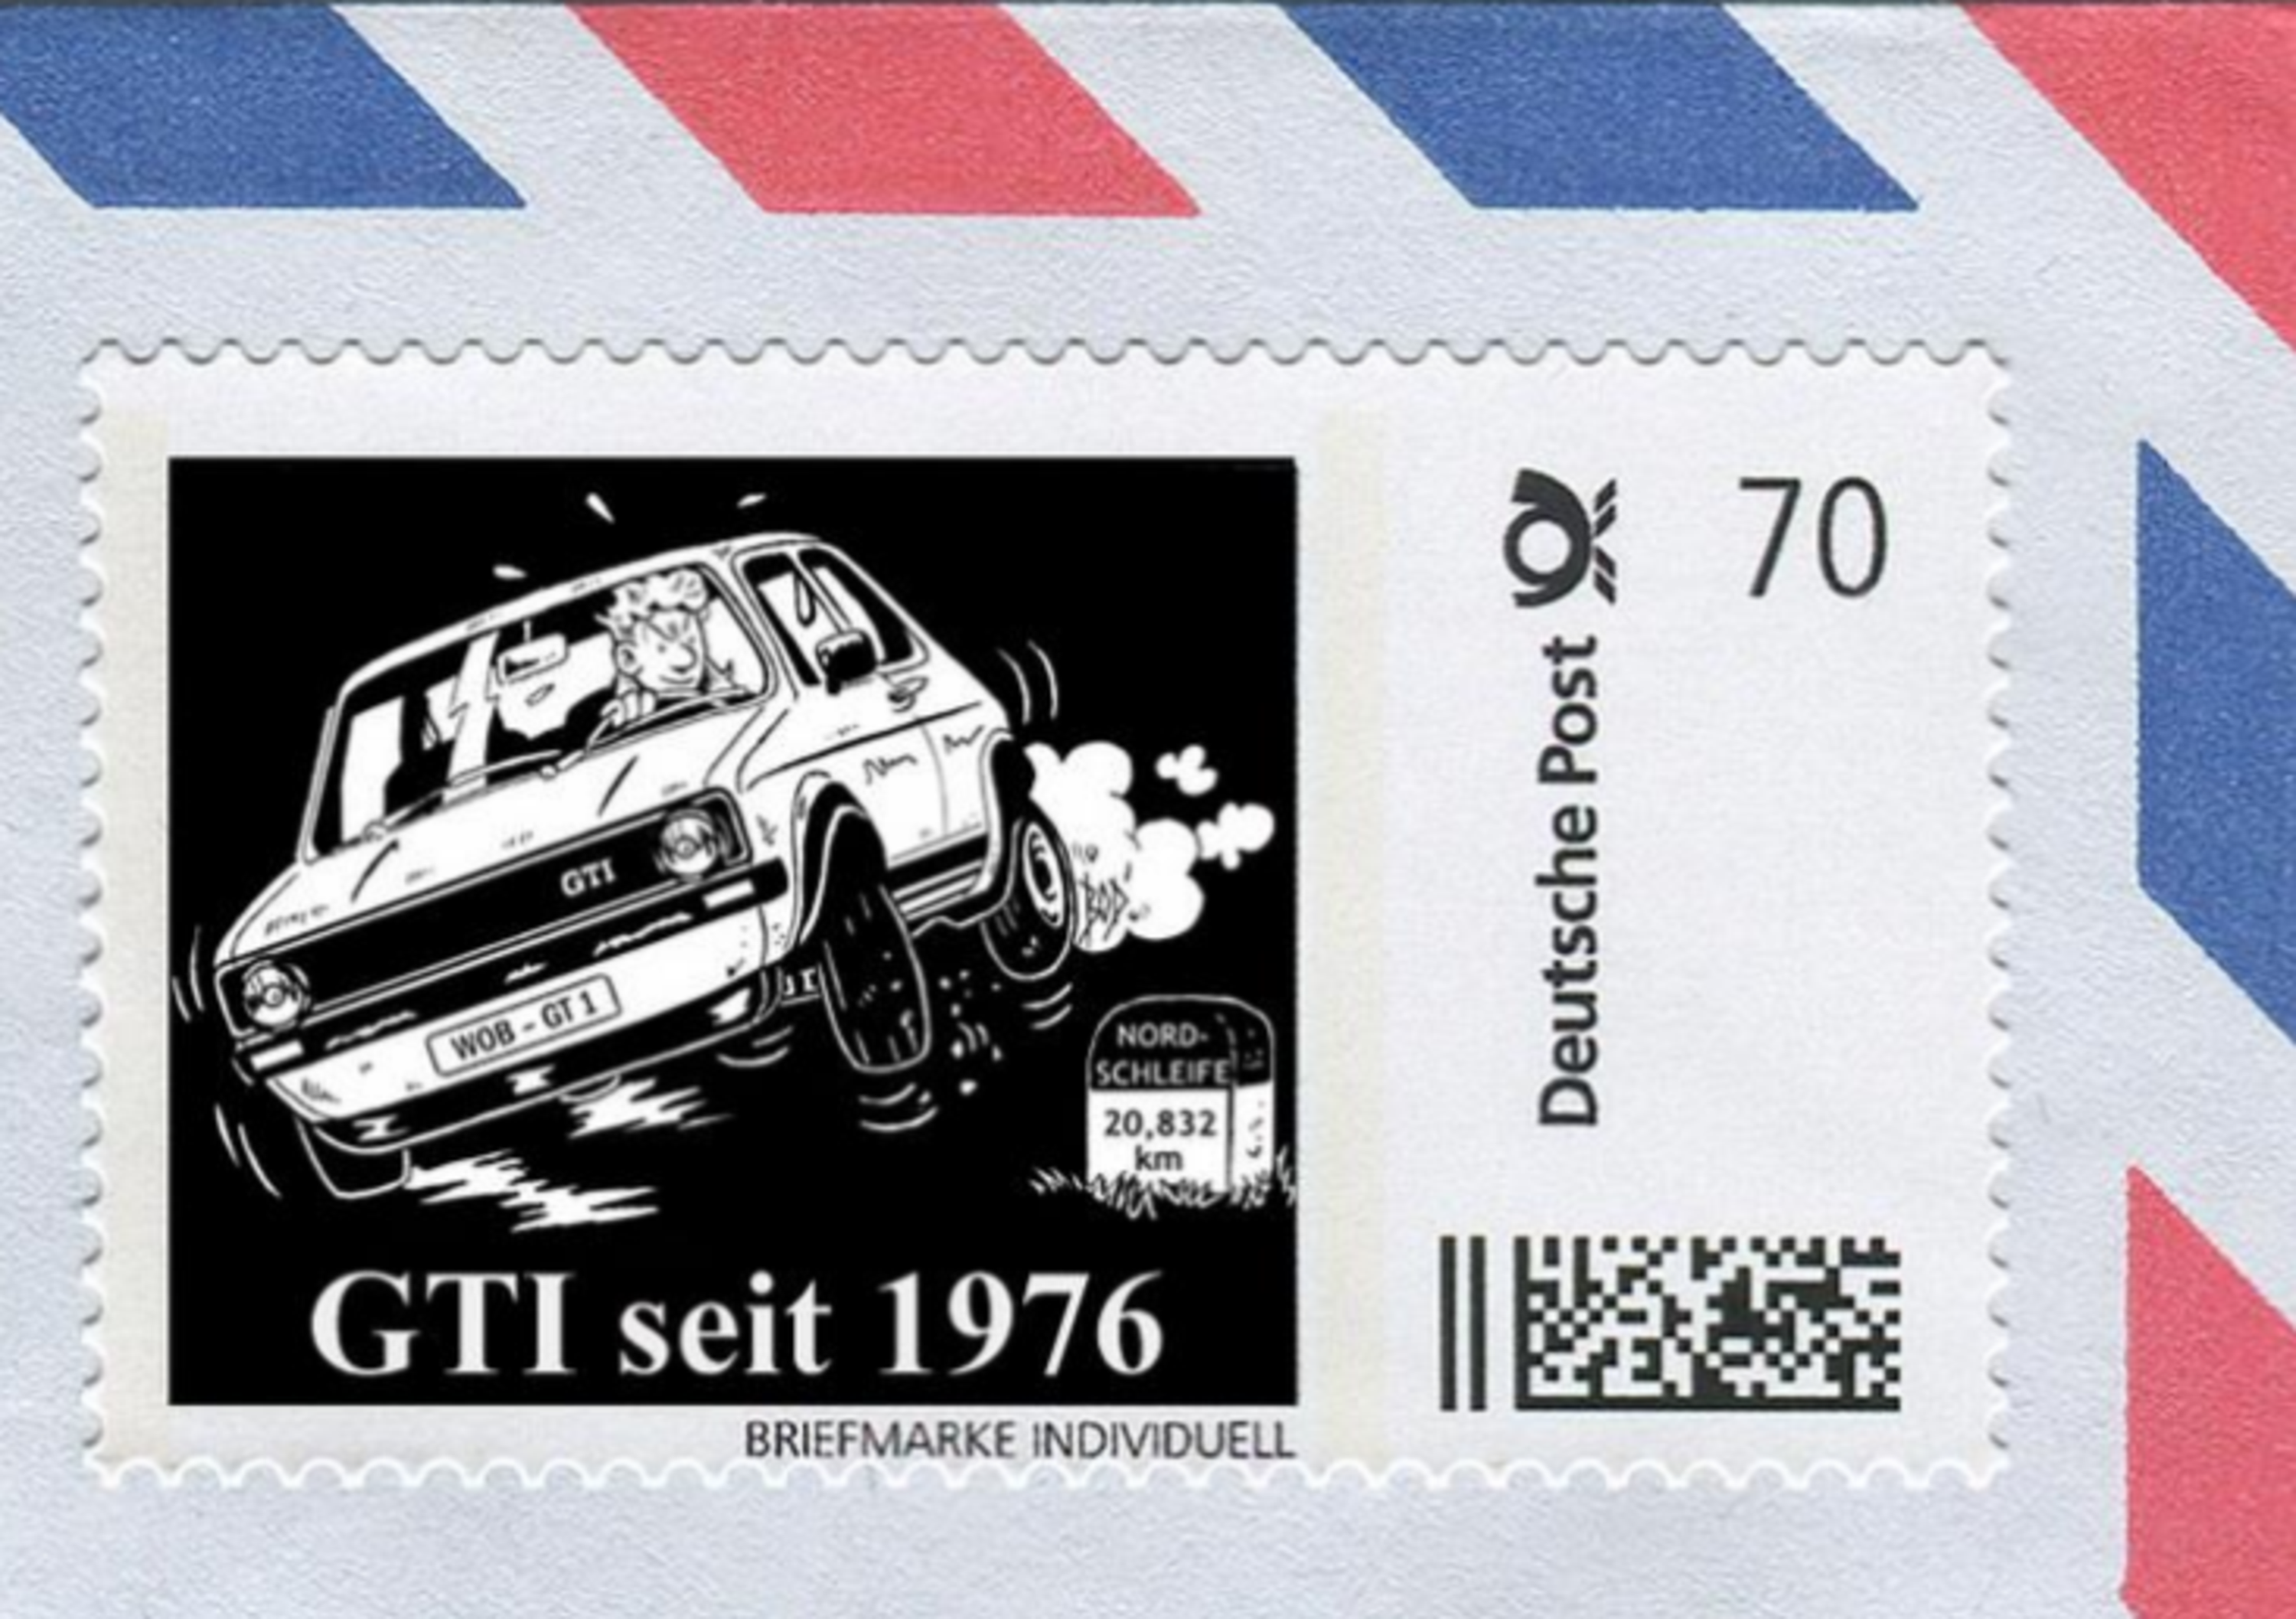 Golf GTI, francobollo ad hoc 